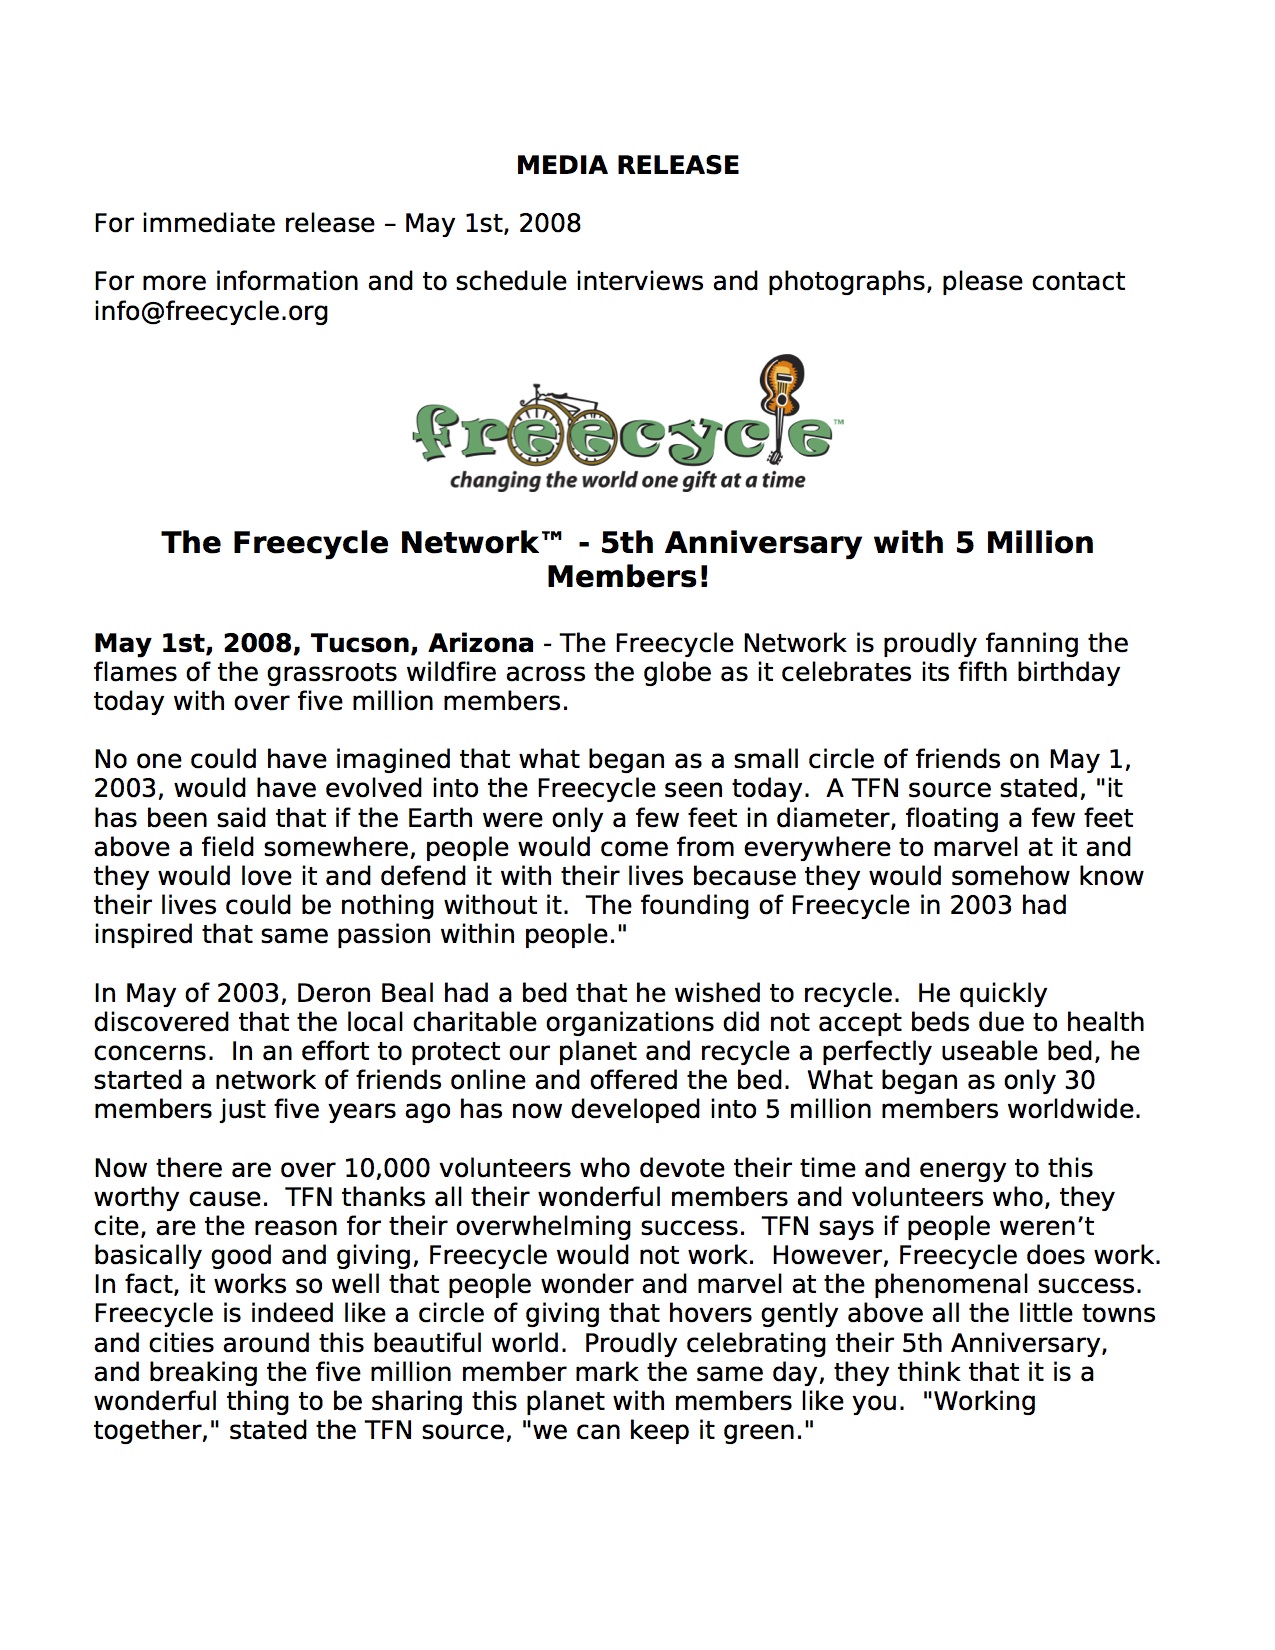 08-05-01 Freecyle 5th birthday press release.jpg